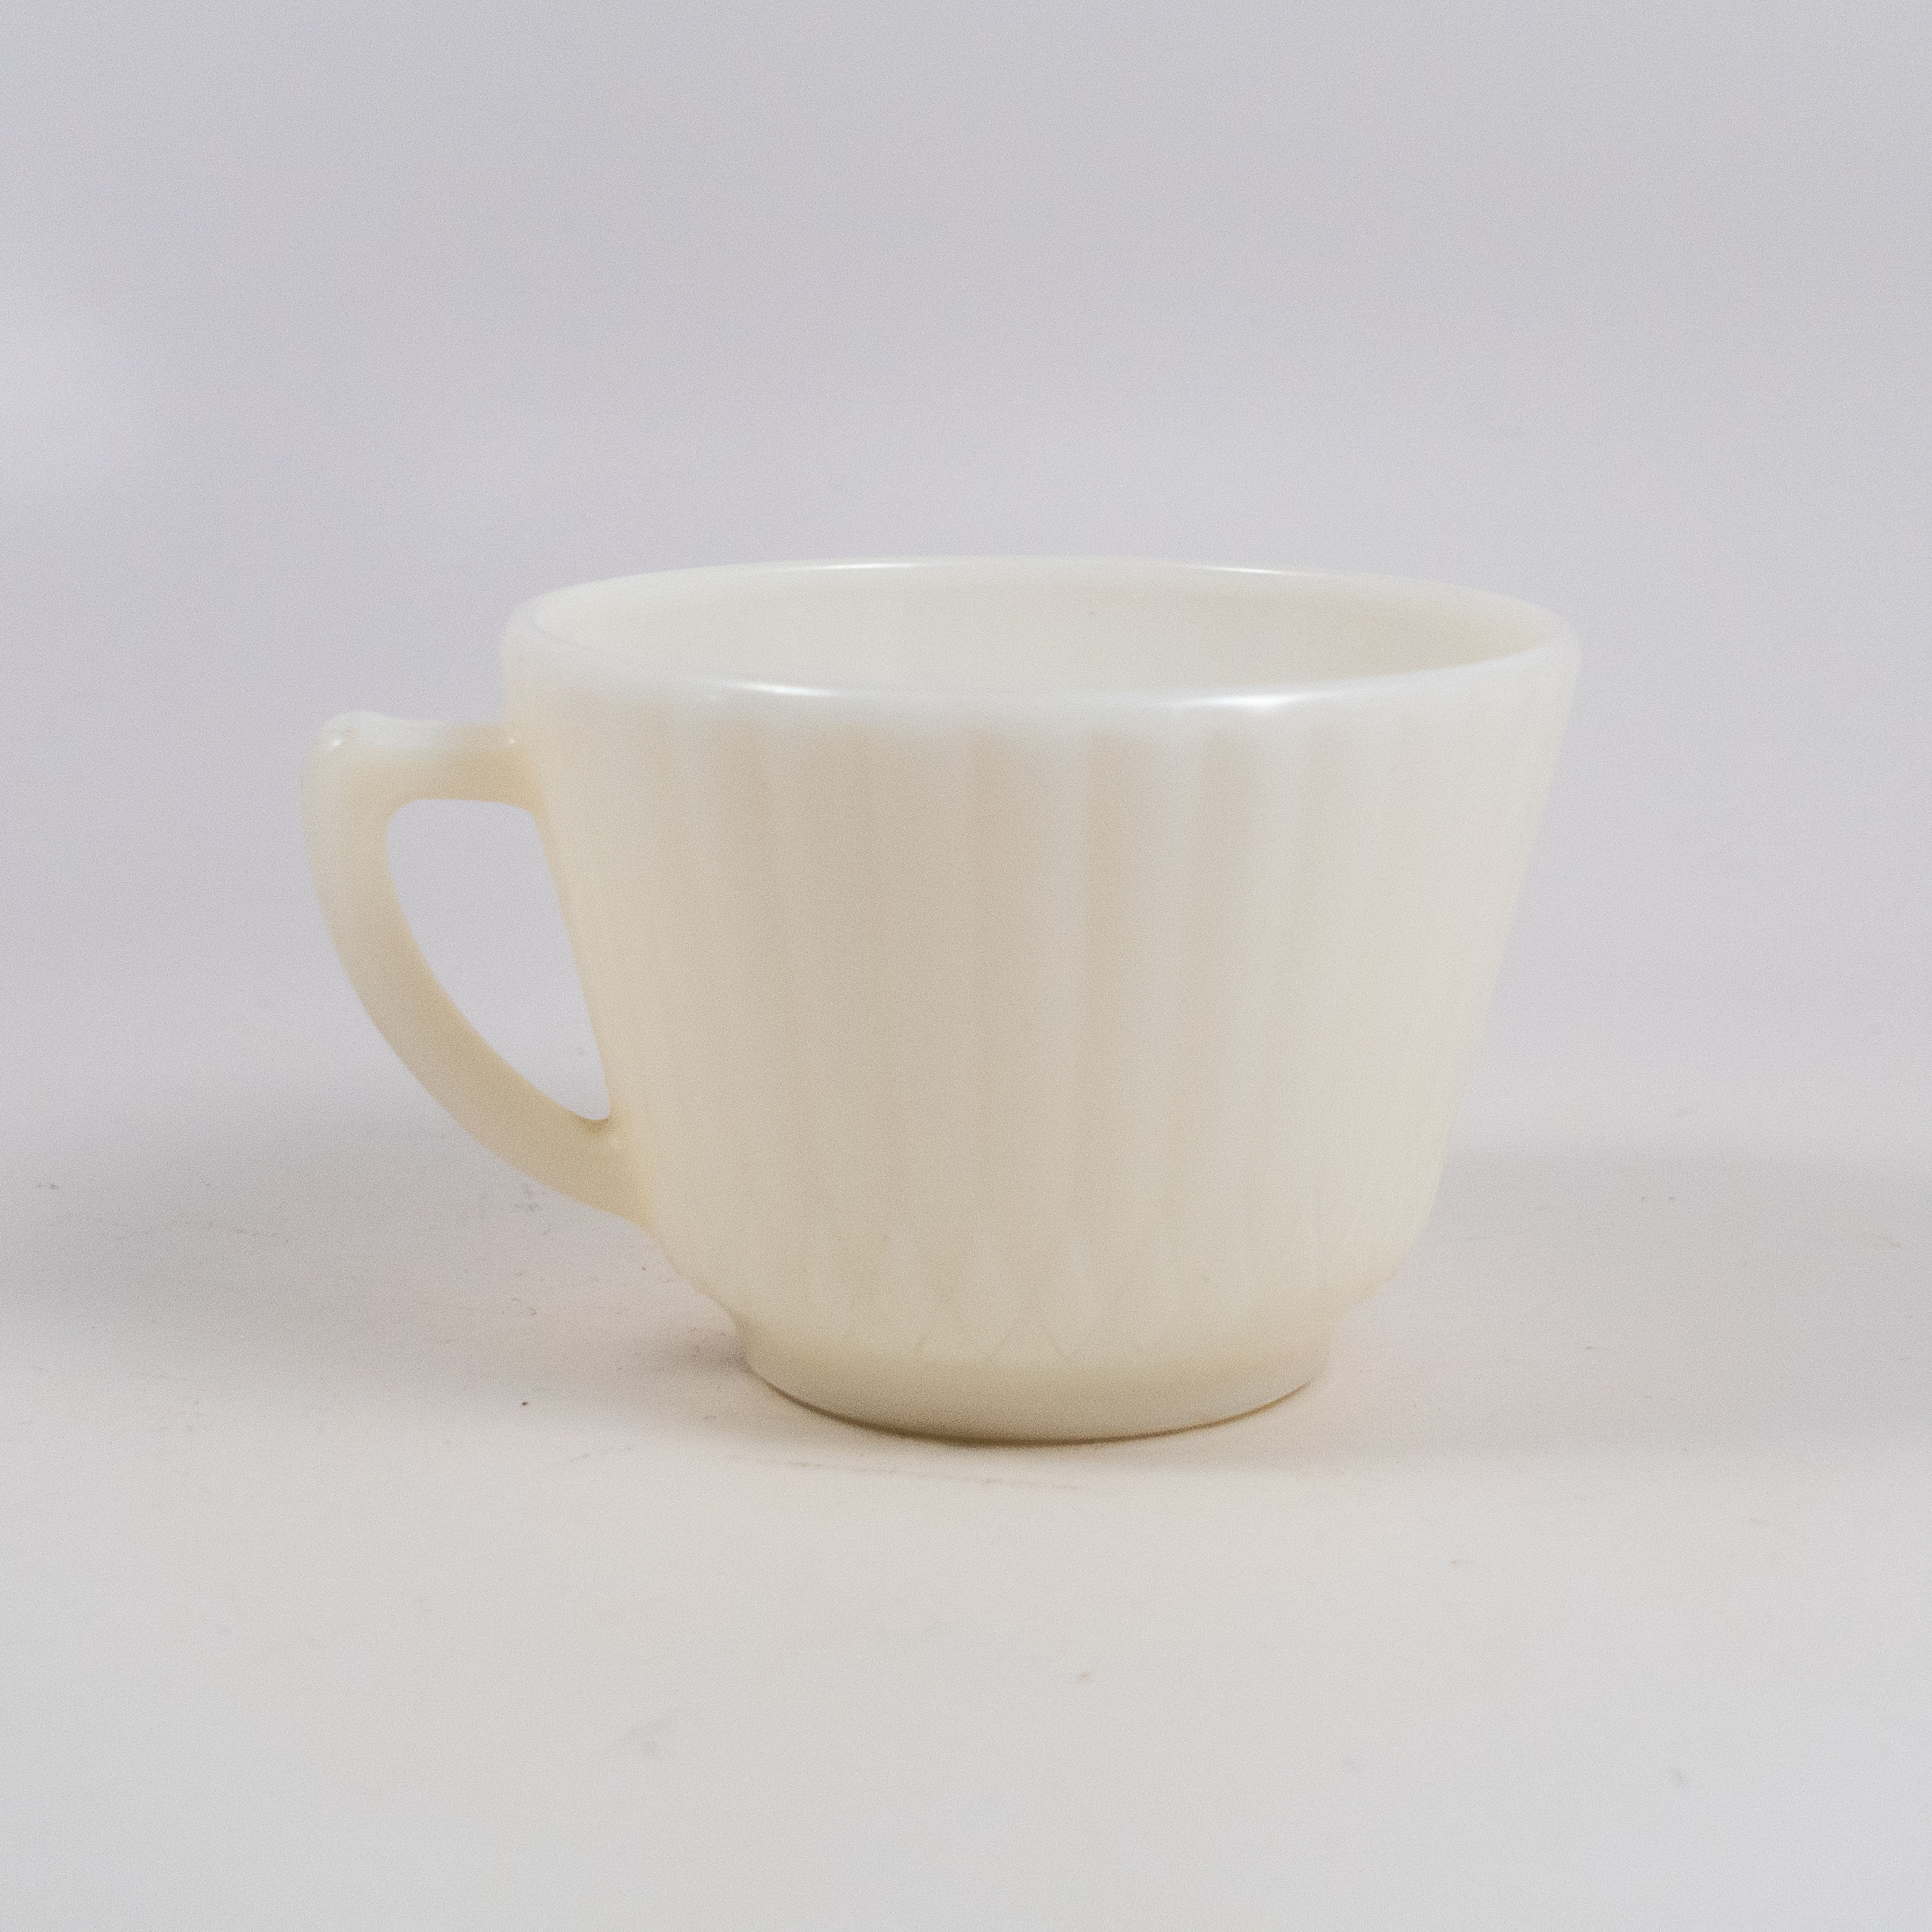 Ribbed Short Clear Glass Ripple Vintage Glassware Coffee Mug Set with  Handle, Four Spoon, 12 oz, 4 Piece Set for Latte Milk Coffee Tea Juice  Drinks (350 ml ) 